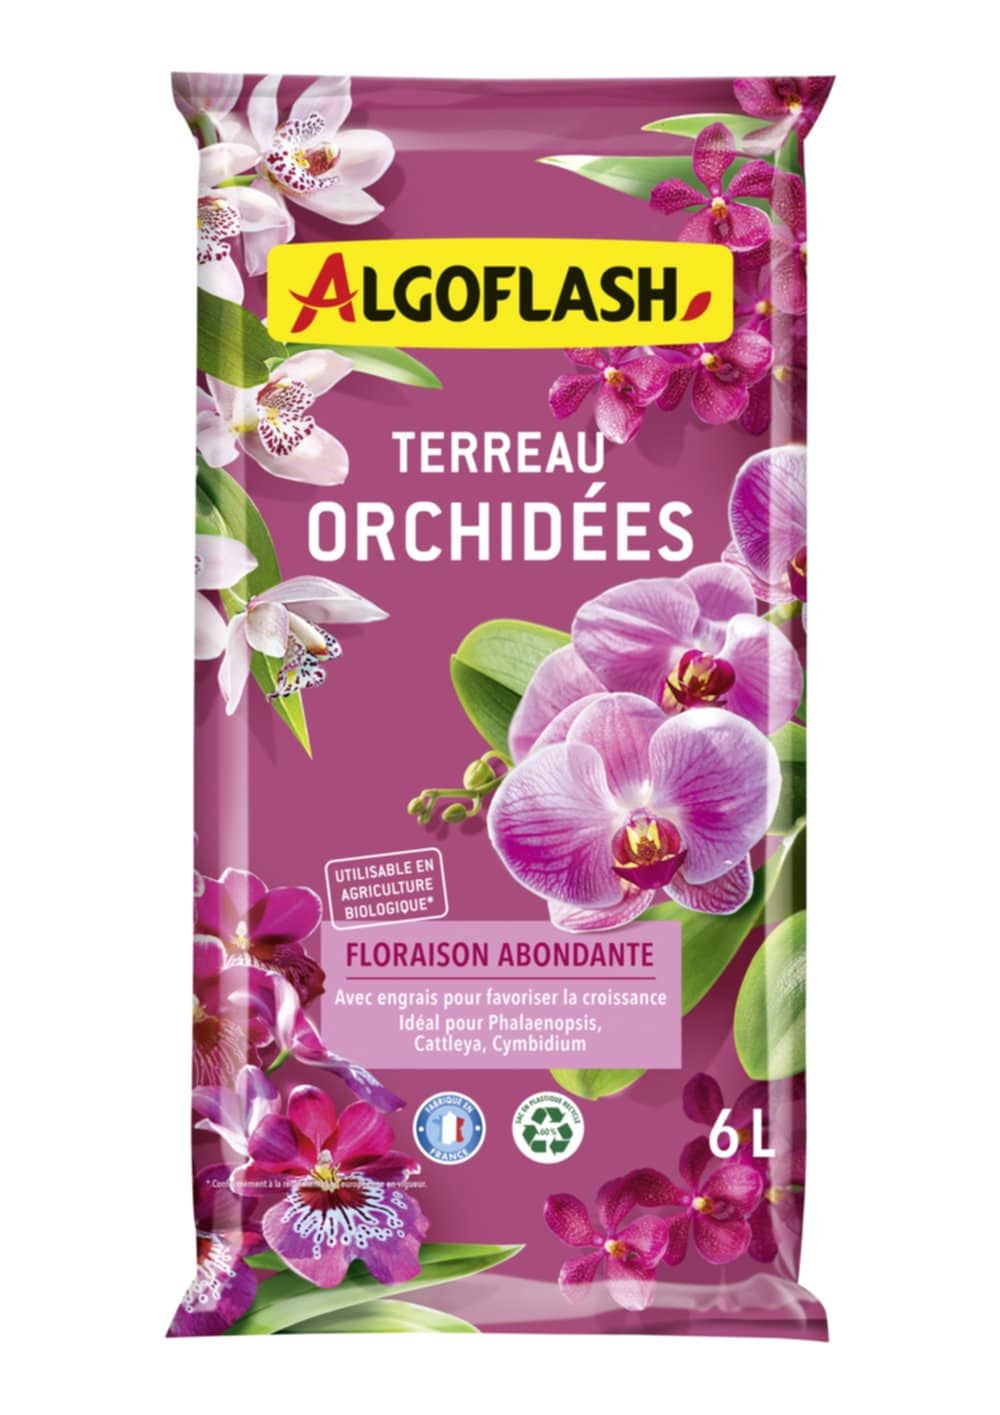 Terreau orchidee 6L